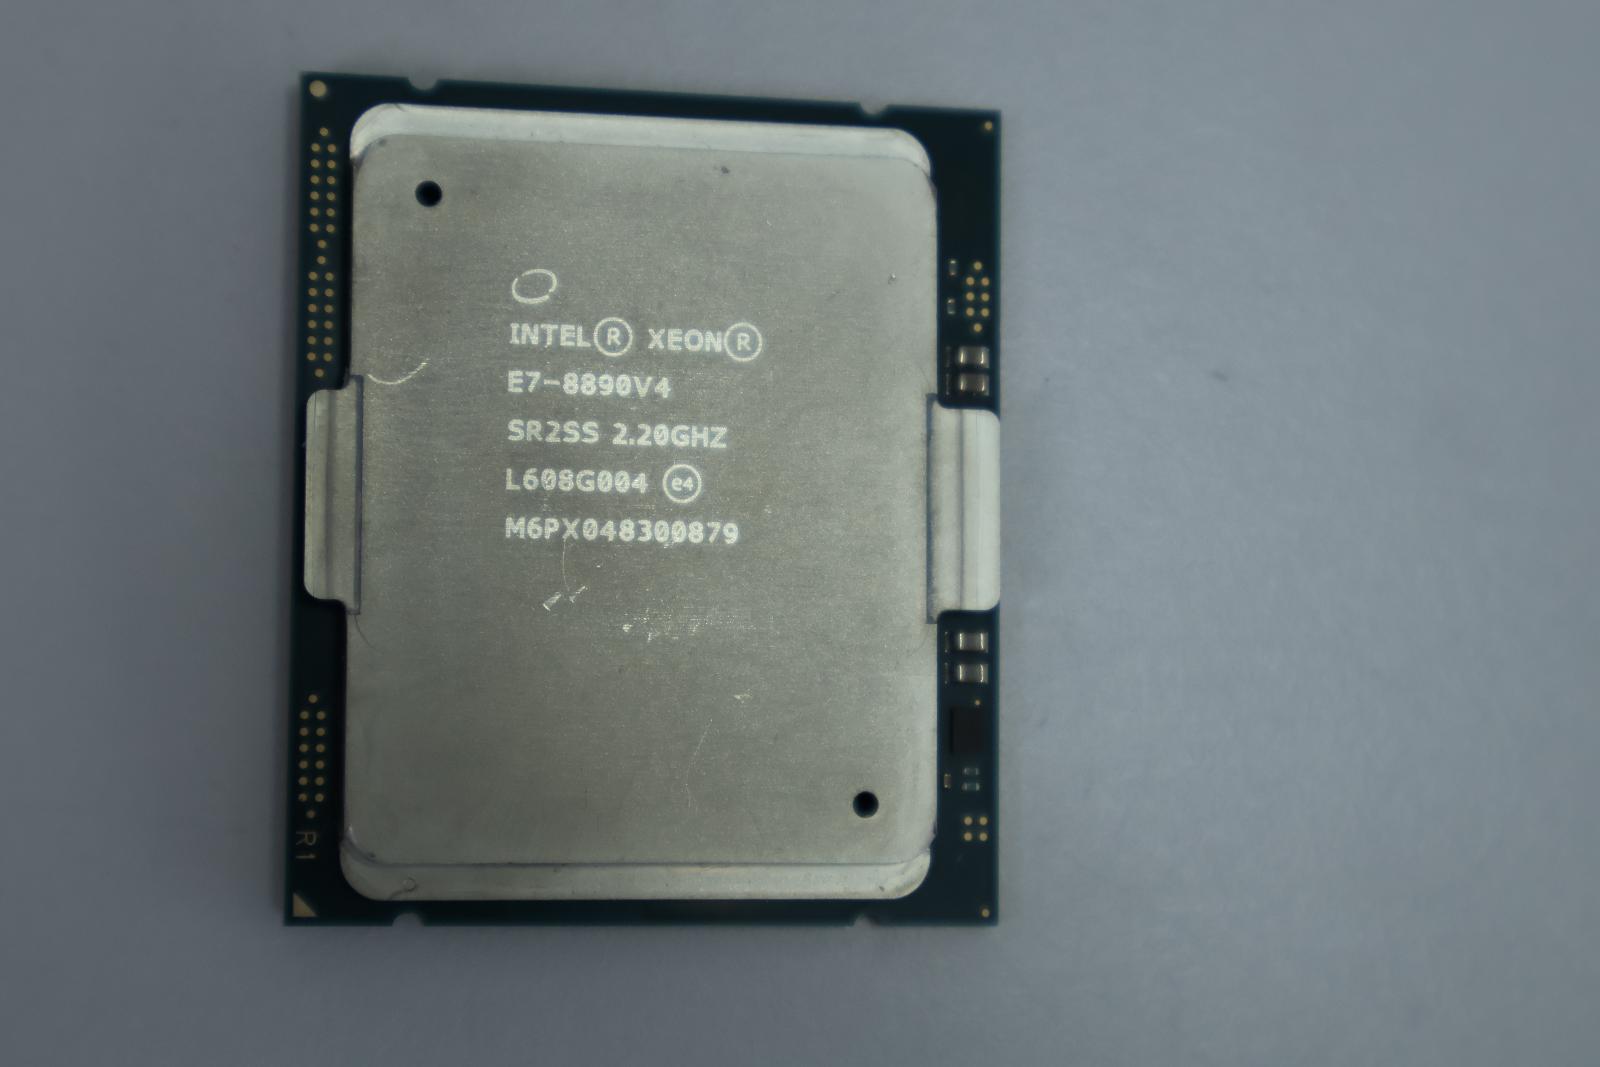 Intel XEON E7-8890V4 (24c, 48t), faktura [P330] - Počítače a hry